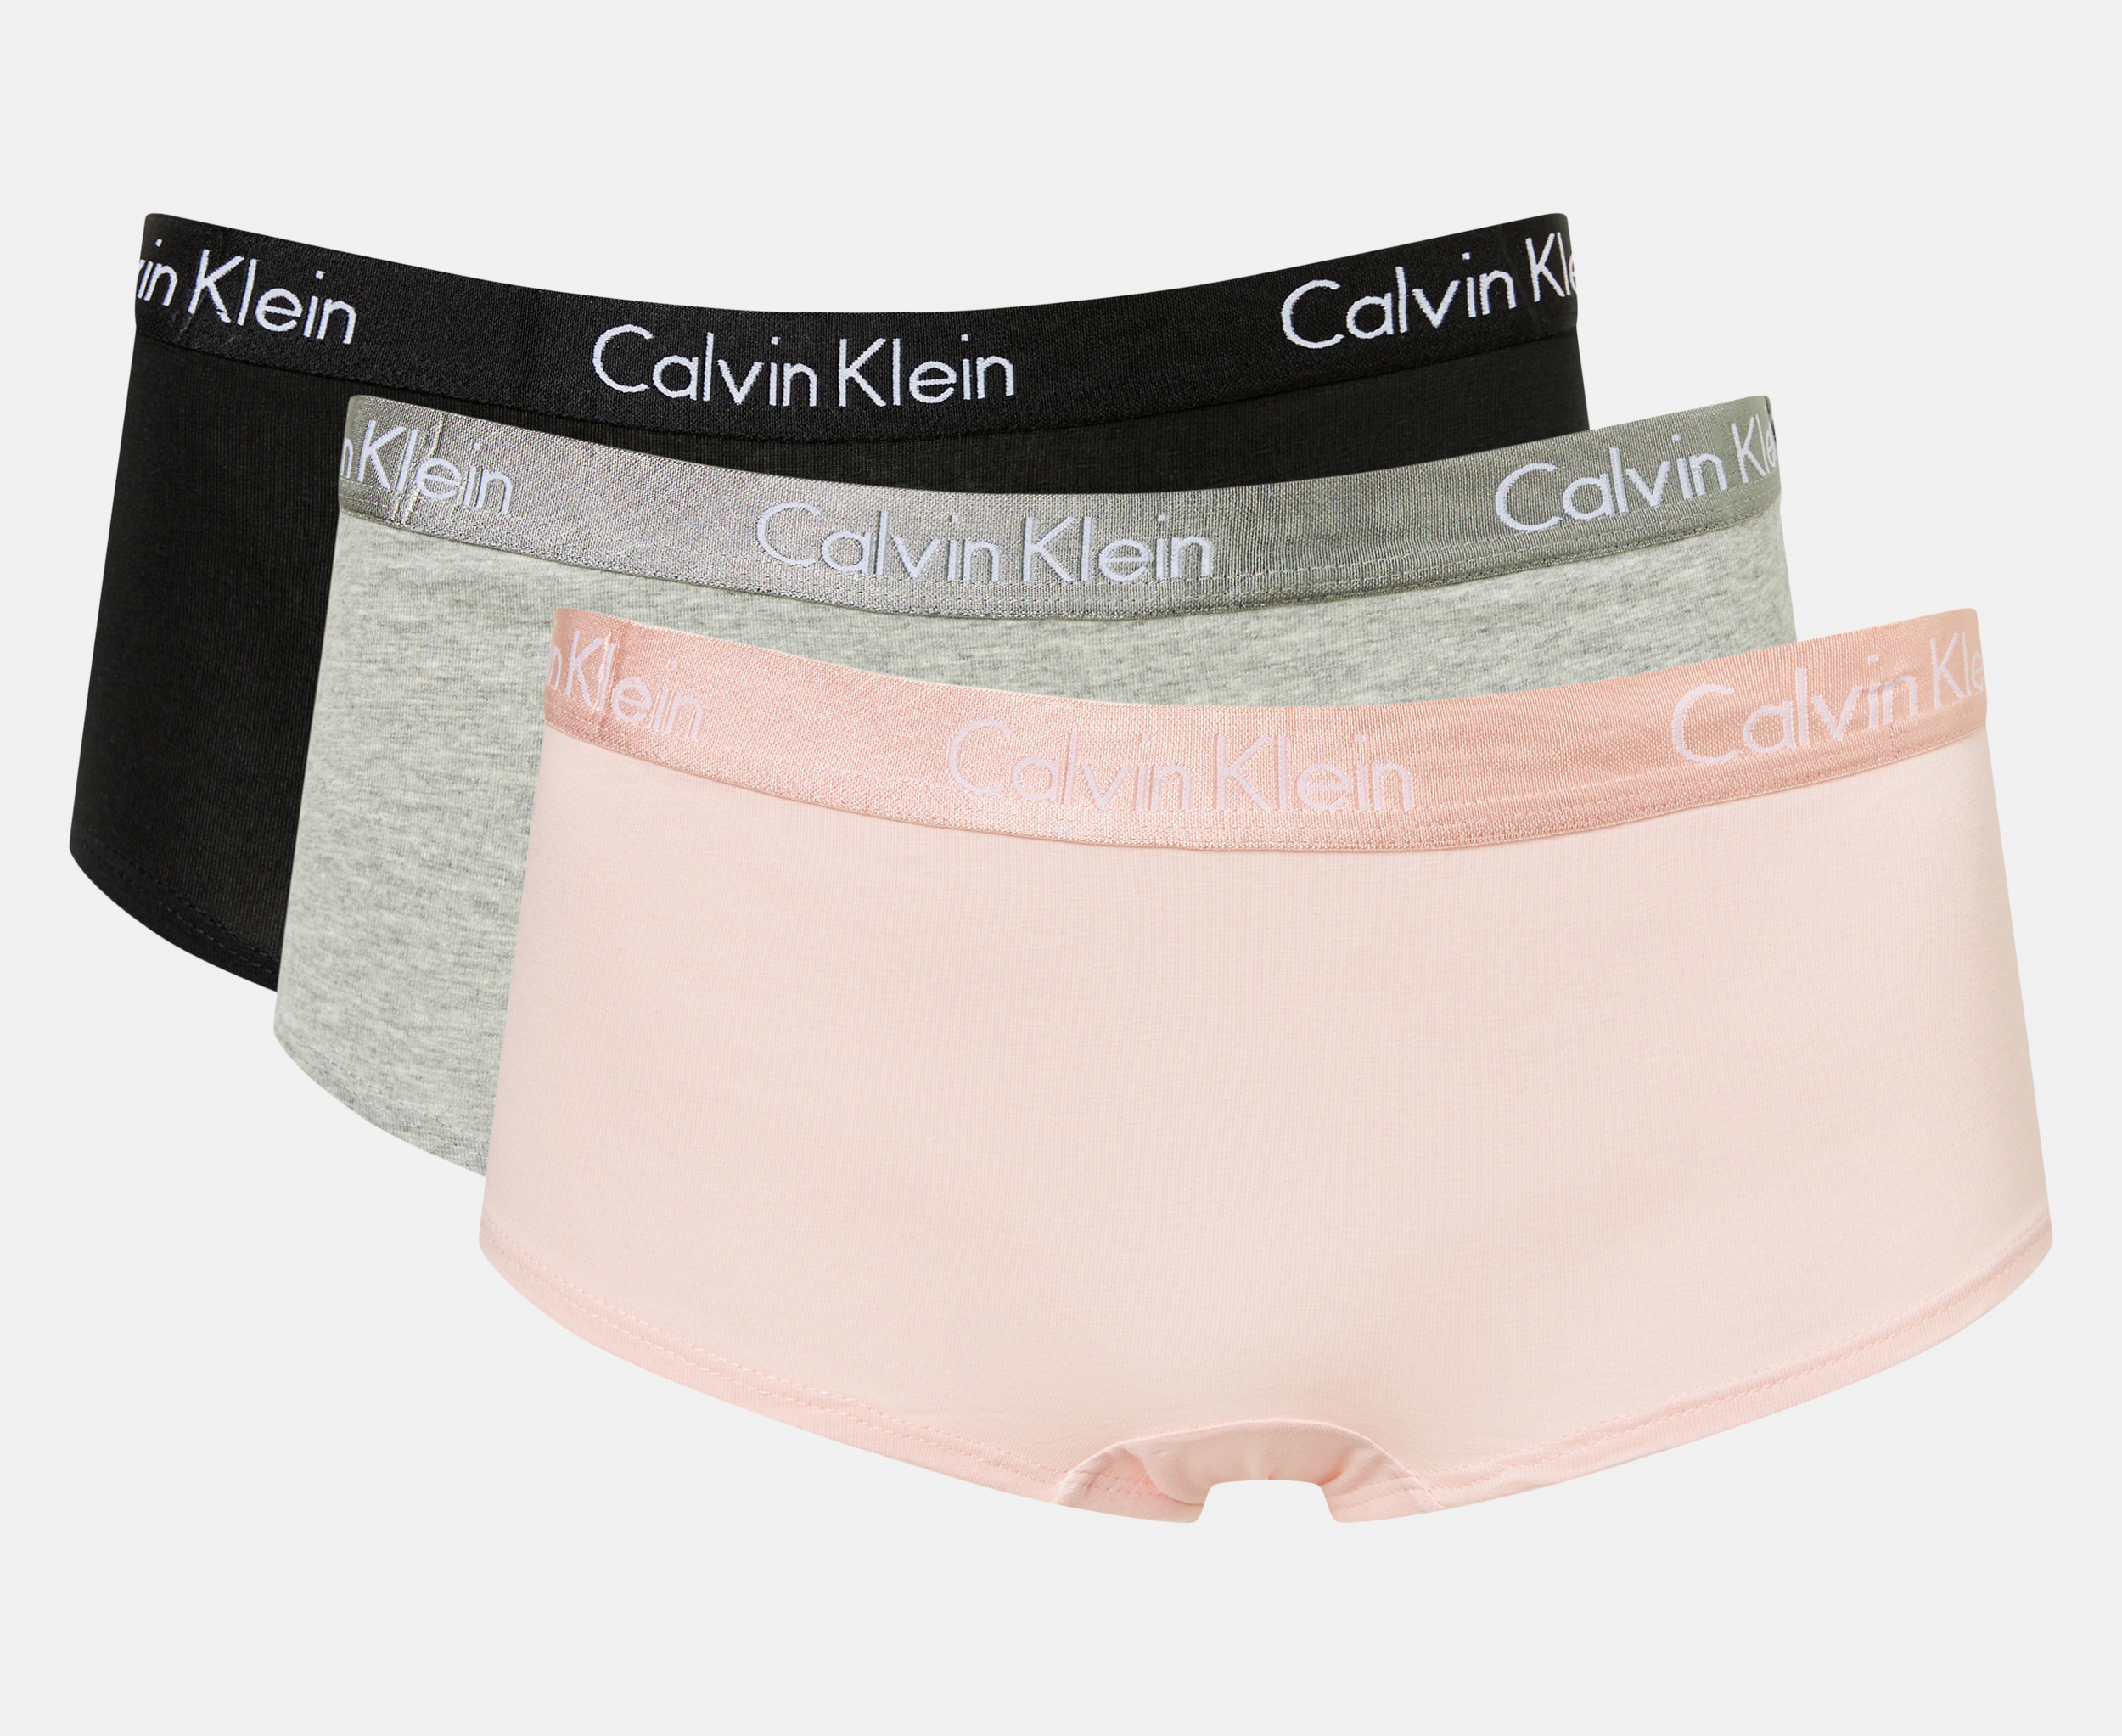 OO  Calvin Klein Underwear Calvin Klein Women's Cotton Motive Thong 3Pk -  Black/ White/ Grey Heather